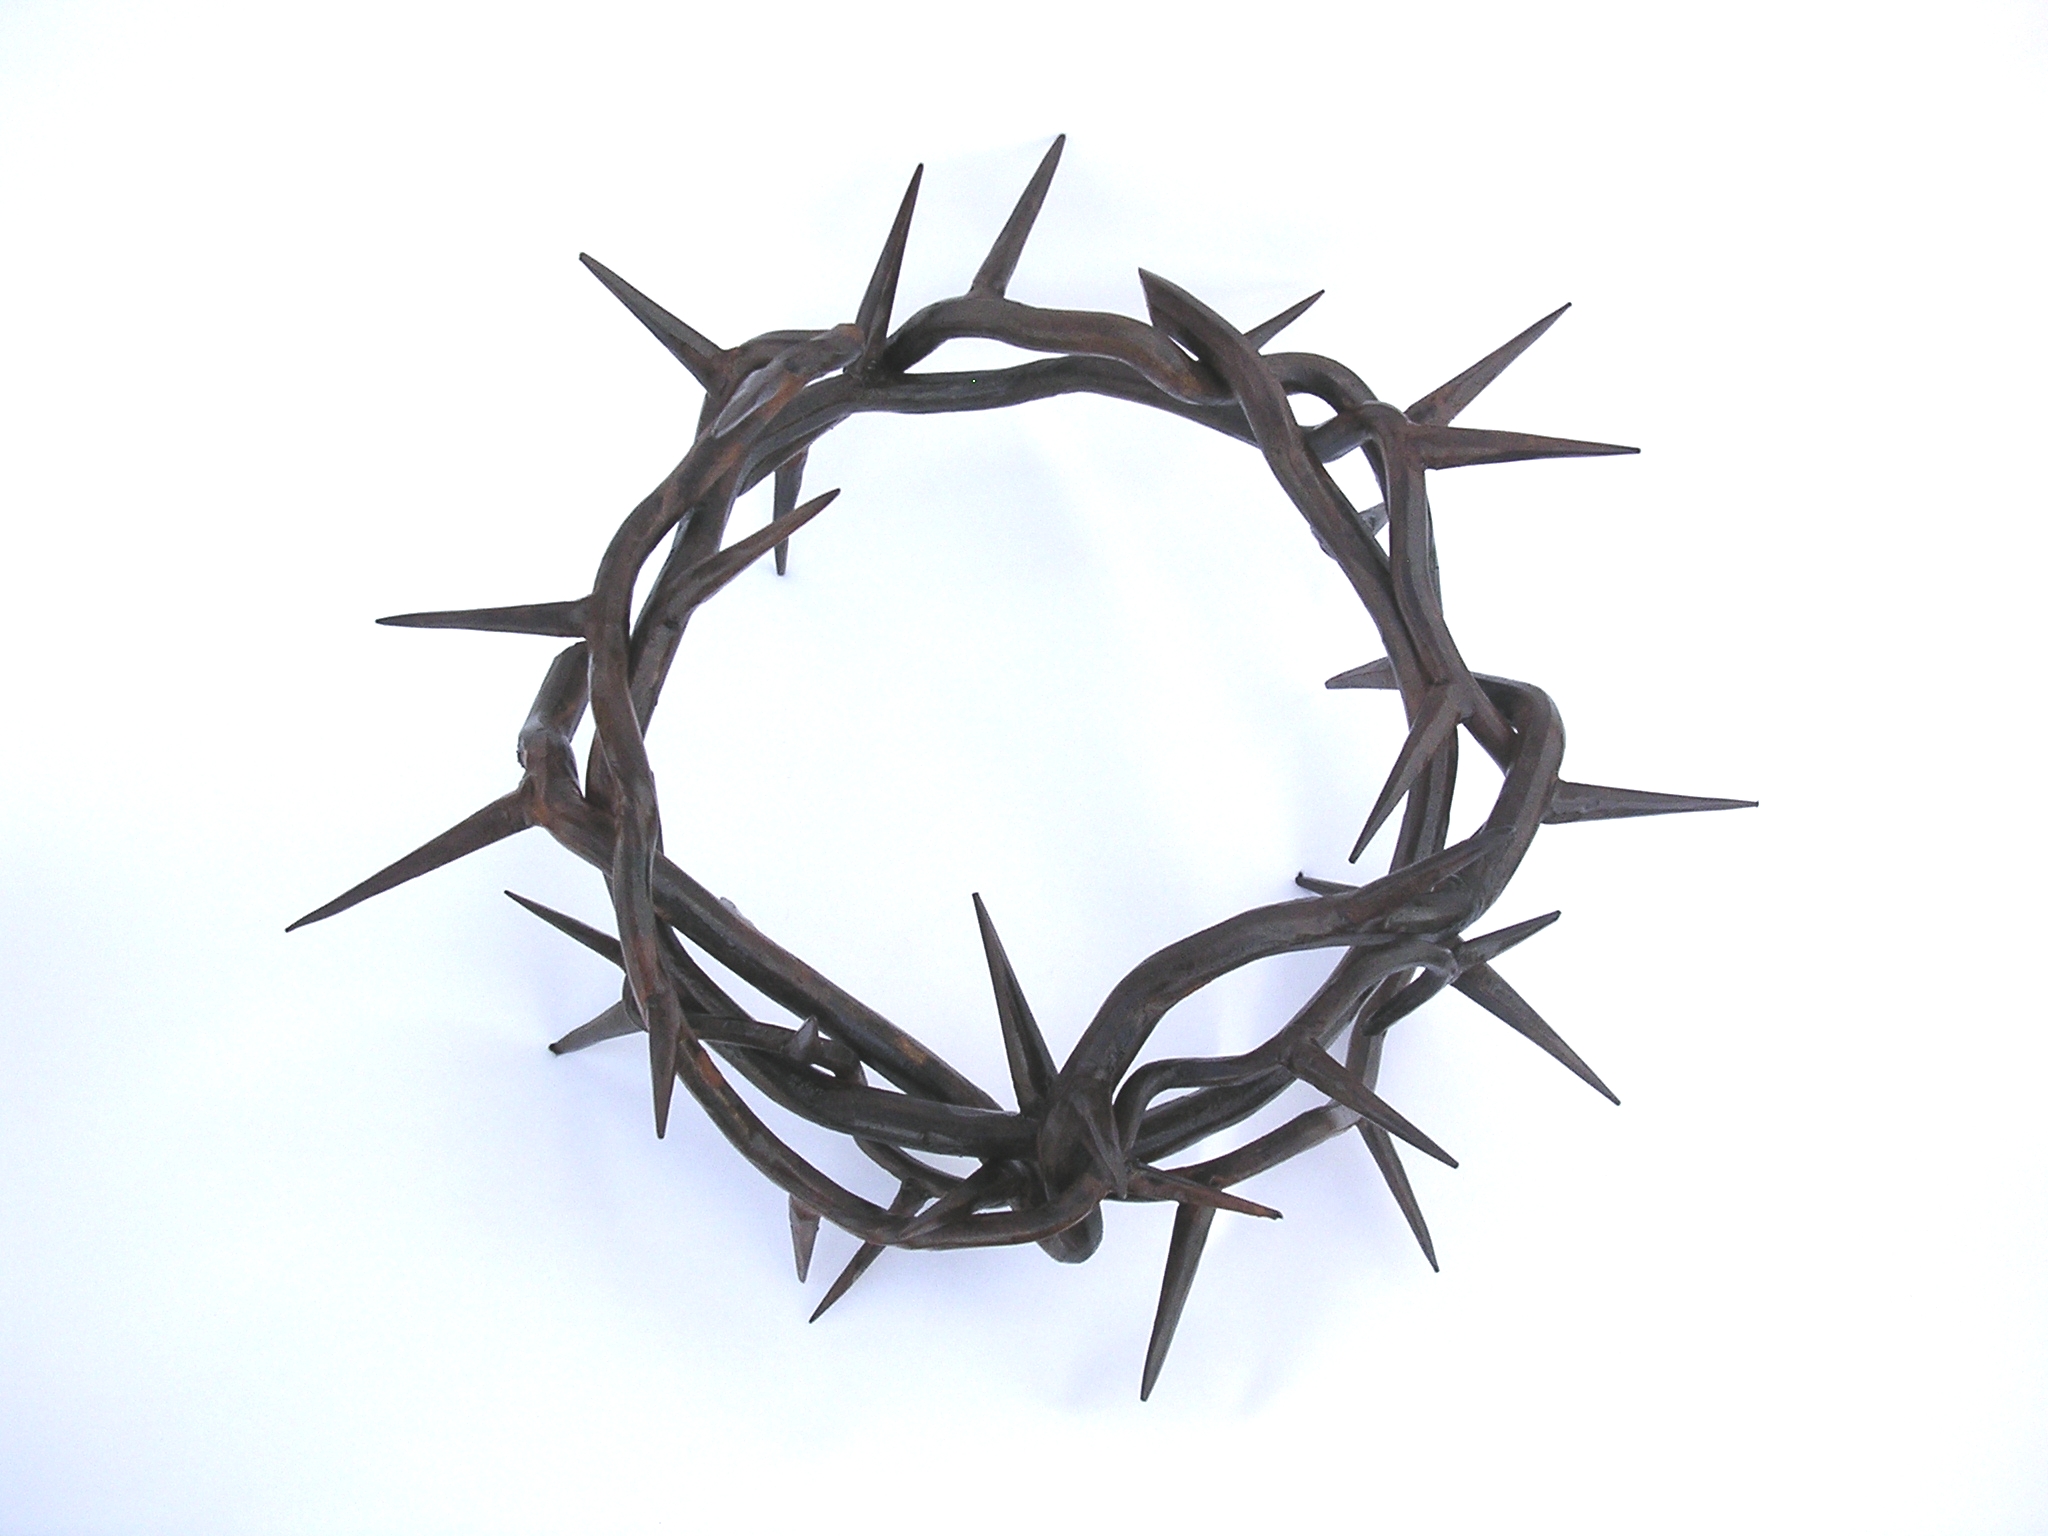 christian clip art crown of thorns - photo #38